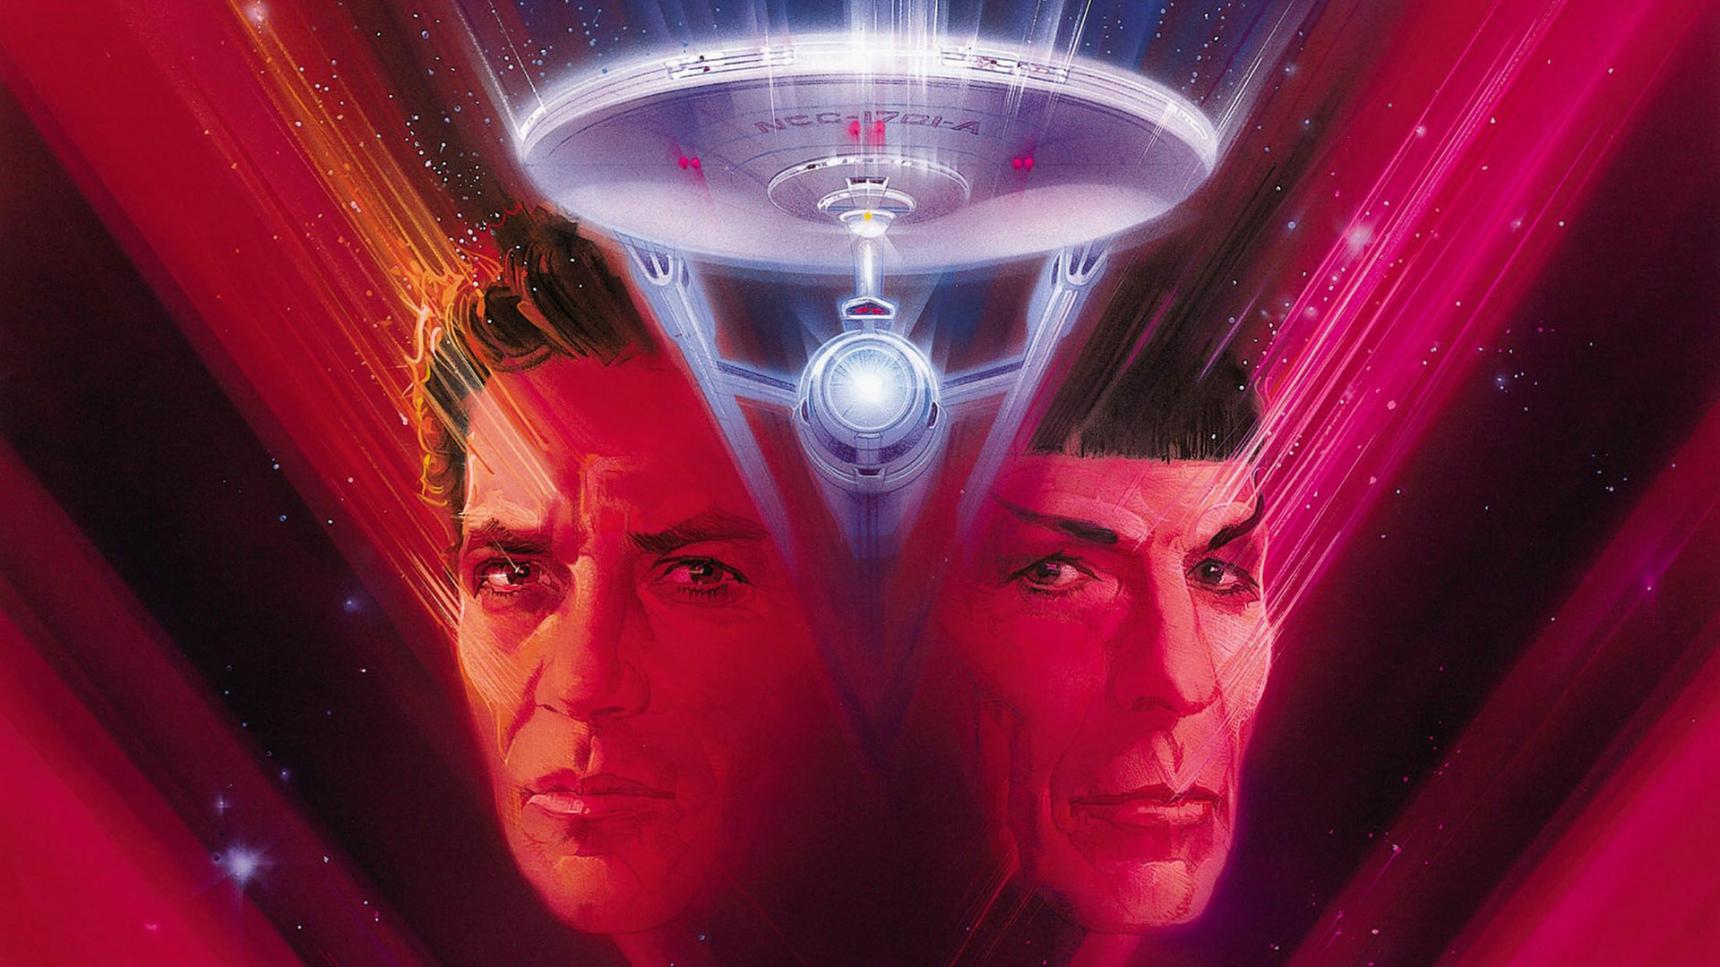 poster de Star Trek V: La última frontera